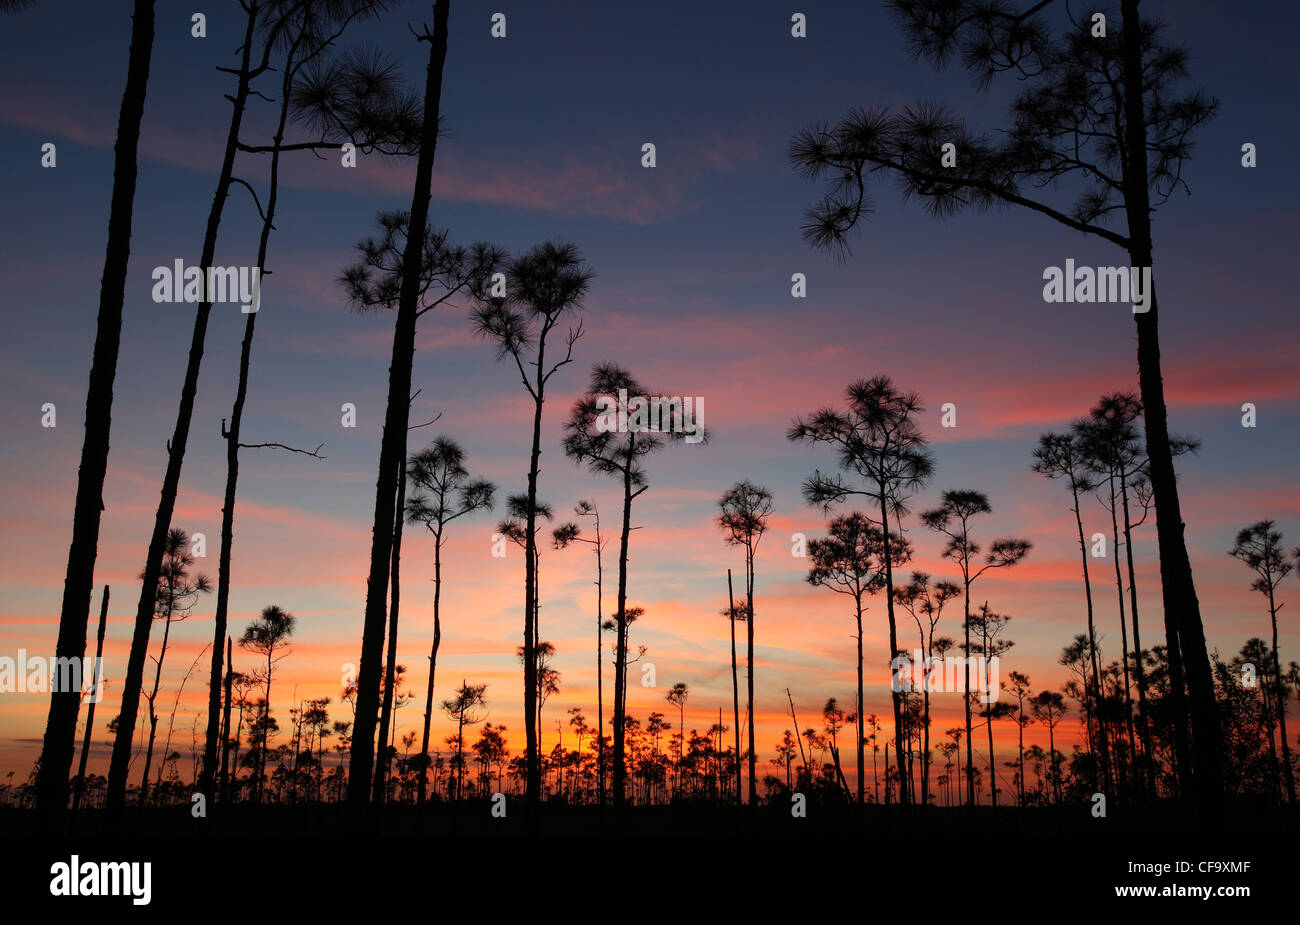 Slash Kiefern bei Sonnenuntergang, Florida Everglades Nationalpark Stockfoto